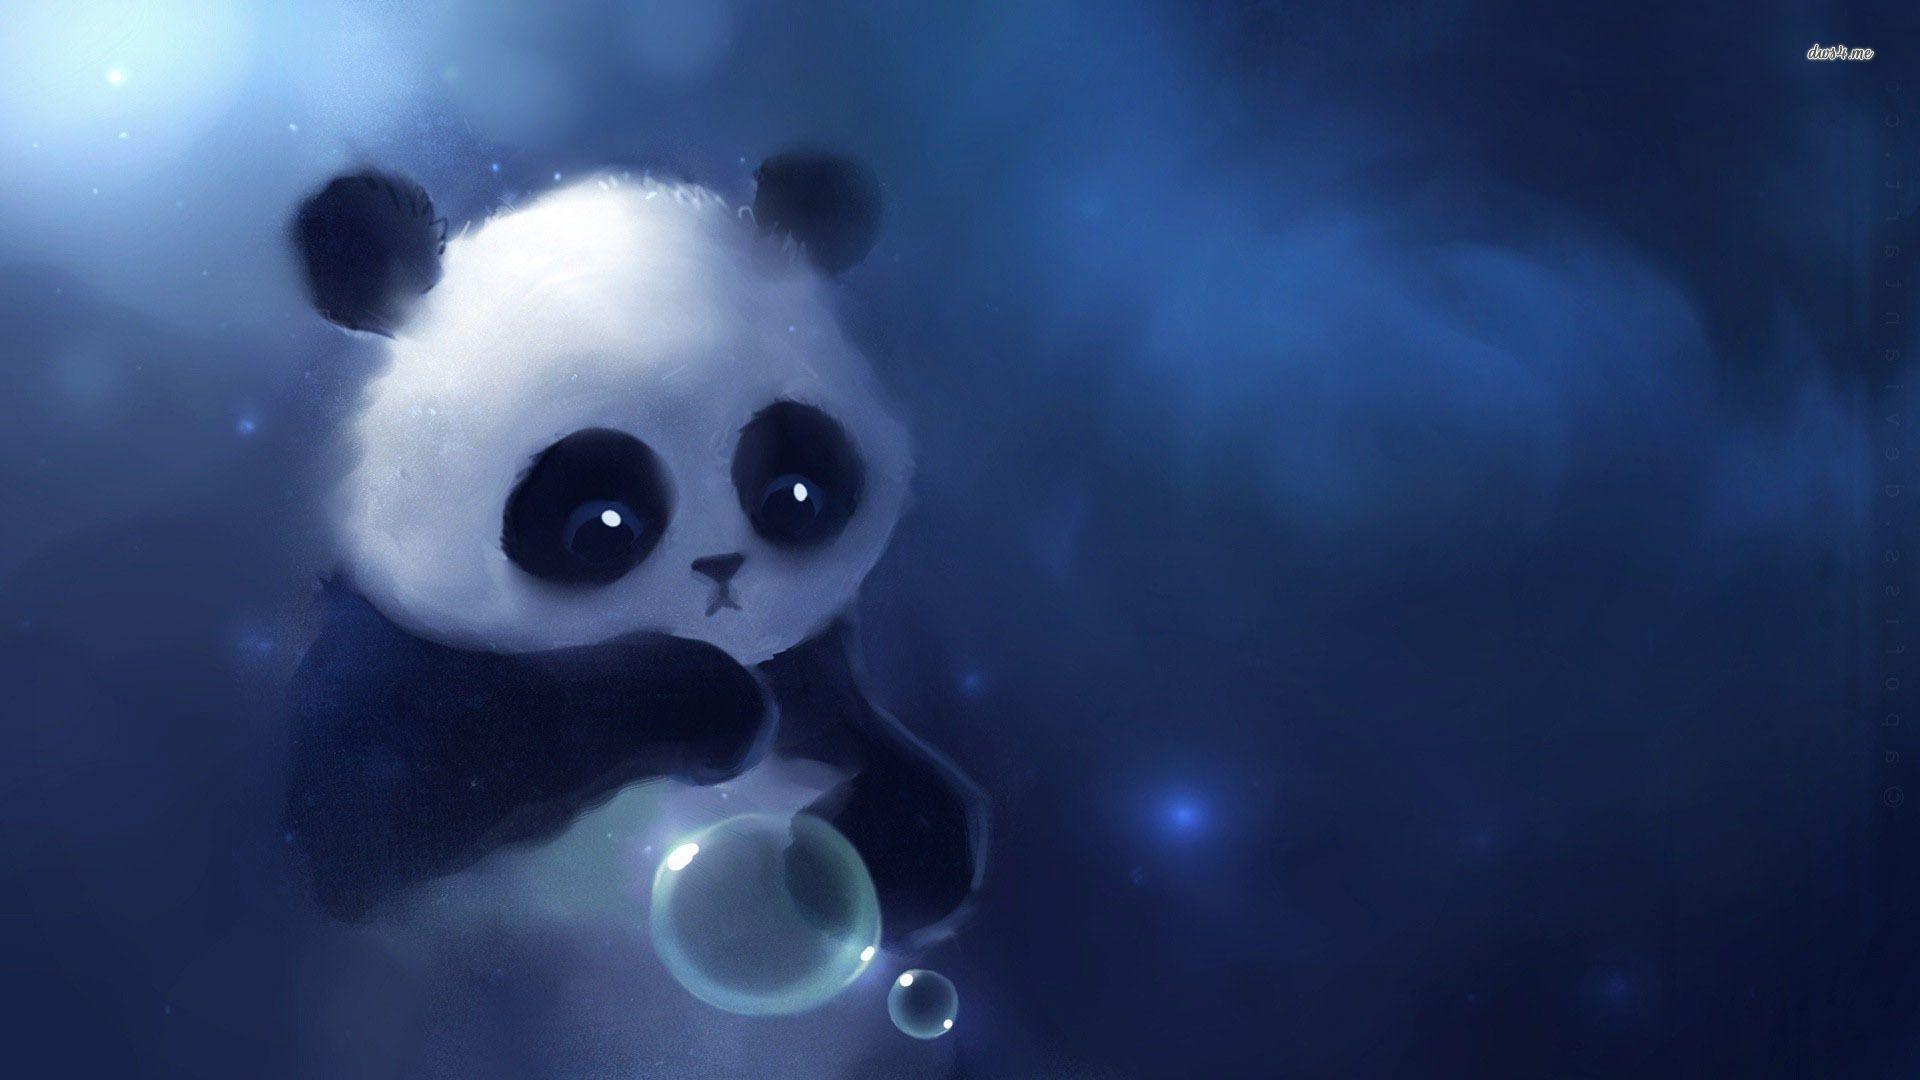 kazygalaxy image Panda and Bubble HD wallpaper and background